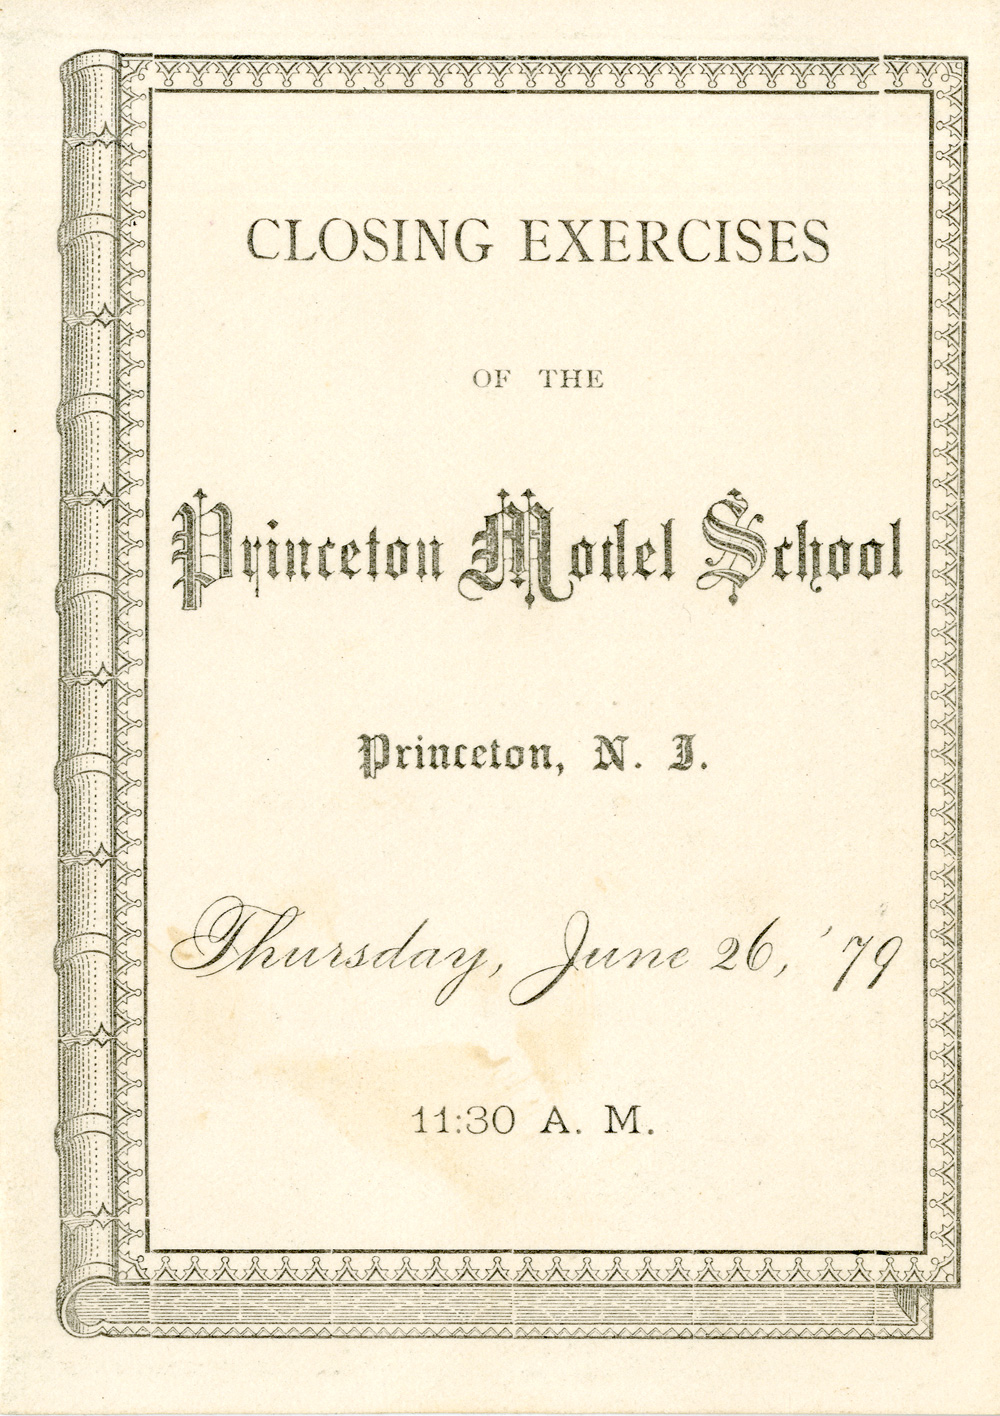 Closing Exercises of the Princeton Model School program, 1879. Historical Society of Princeton